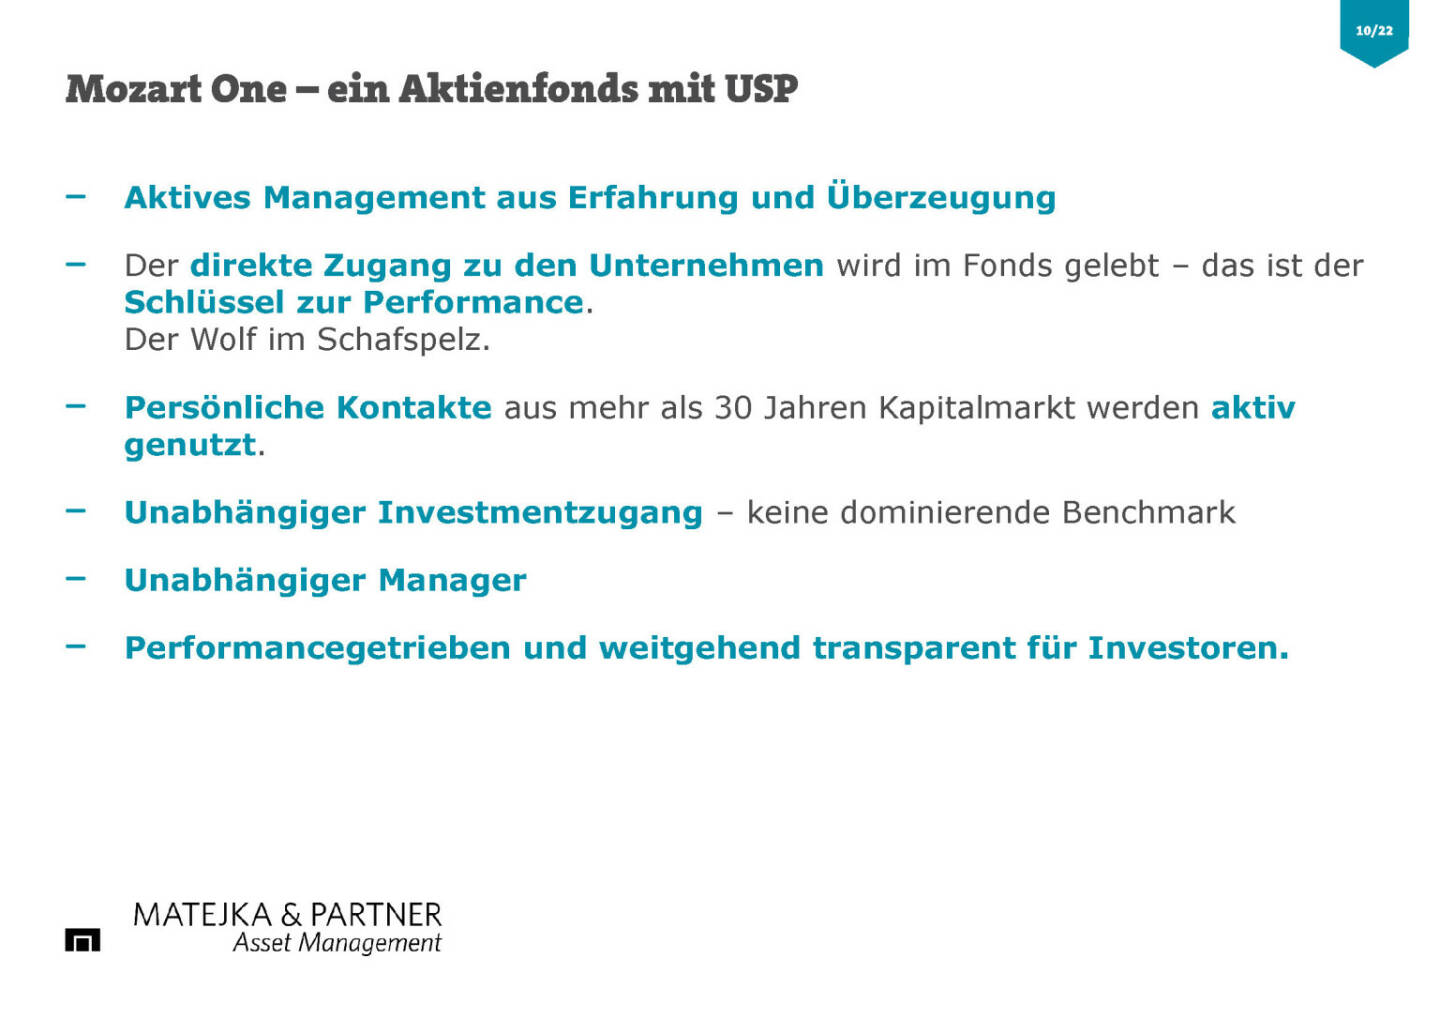 Wiener Privatbank - Mozart One Aktienfonds USP